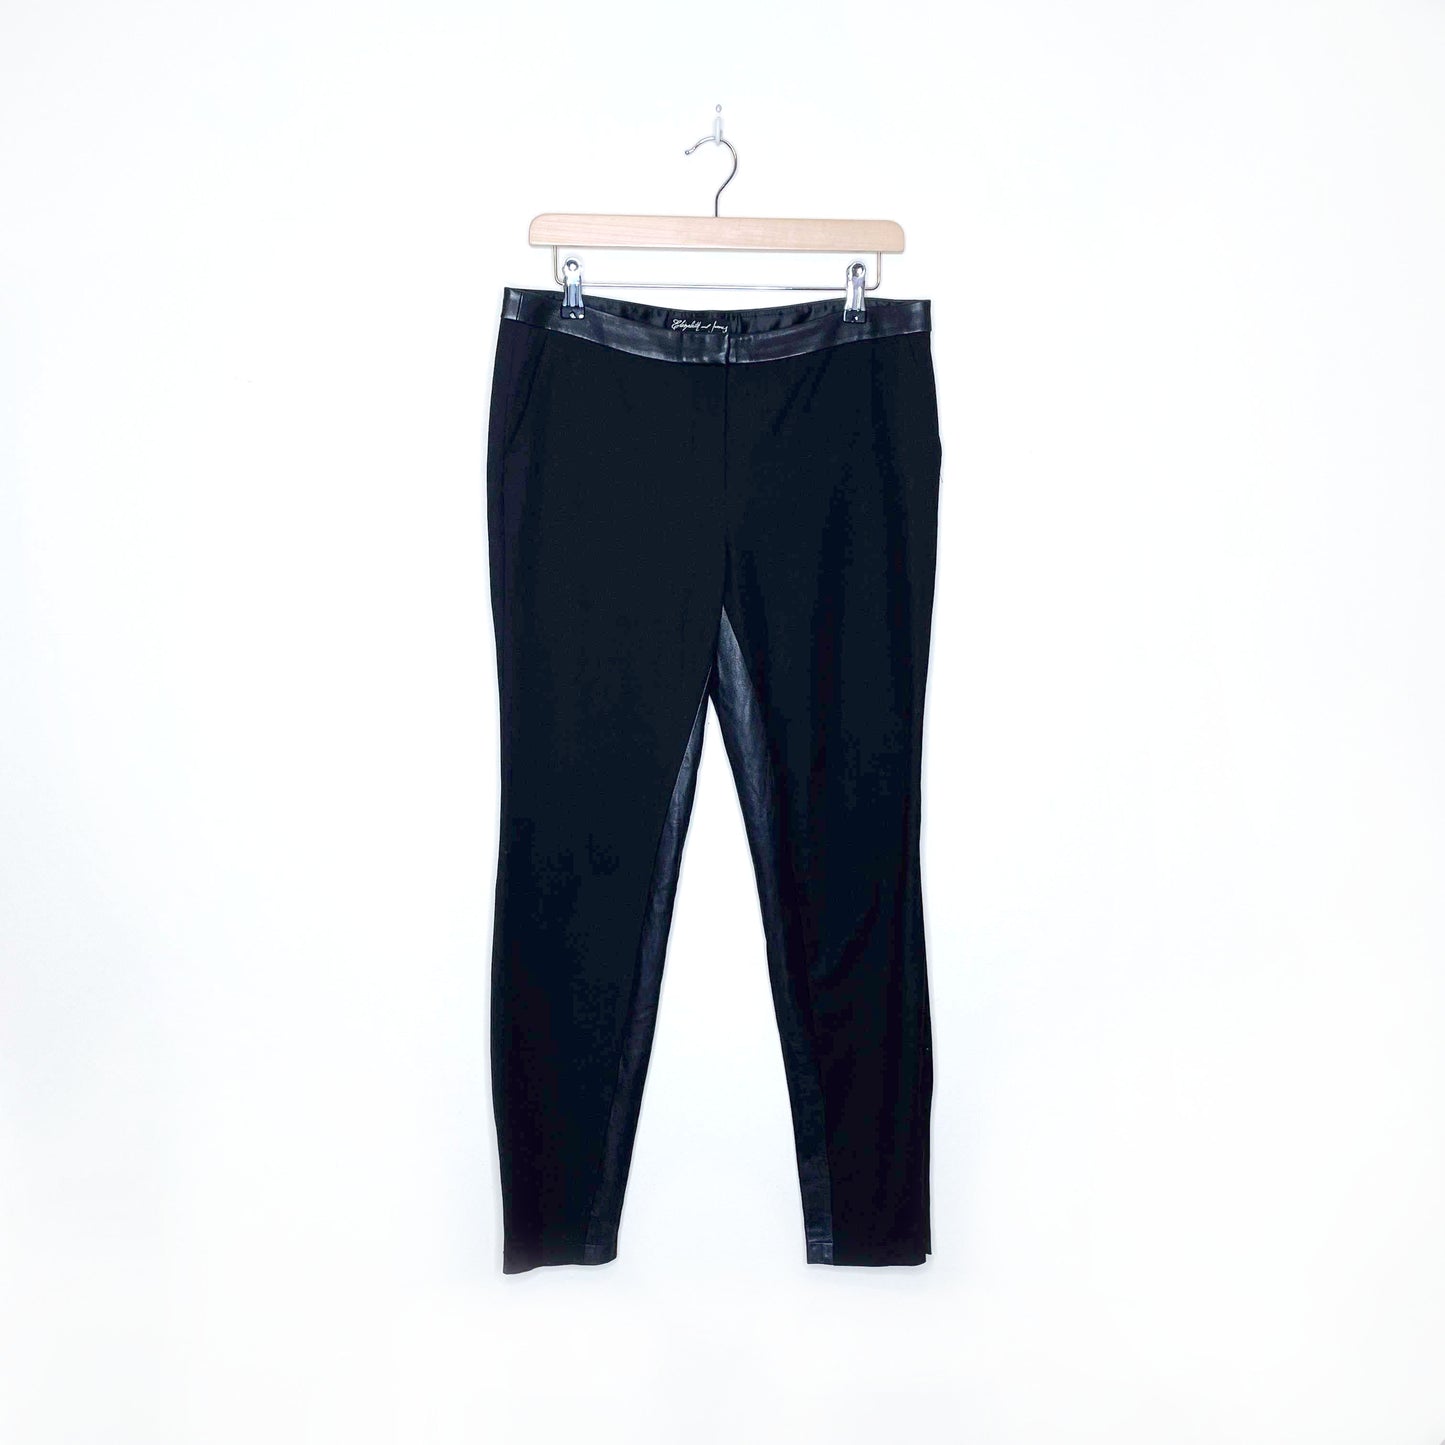 elizabeth and james black leather trim skinny trouser - size 6